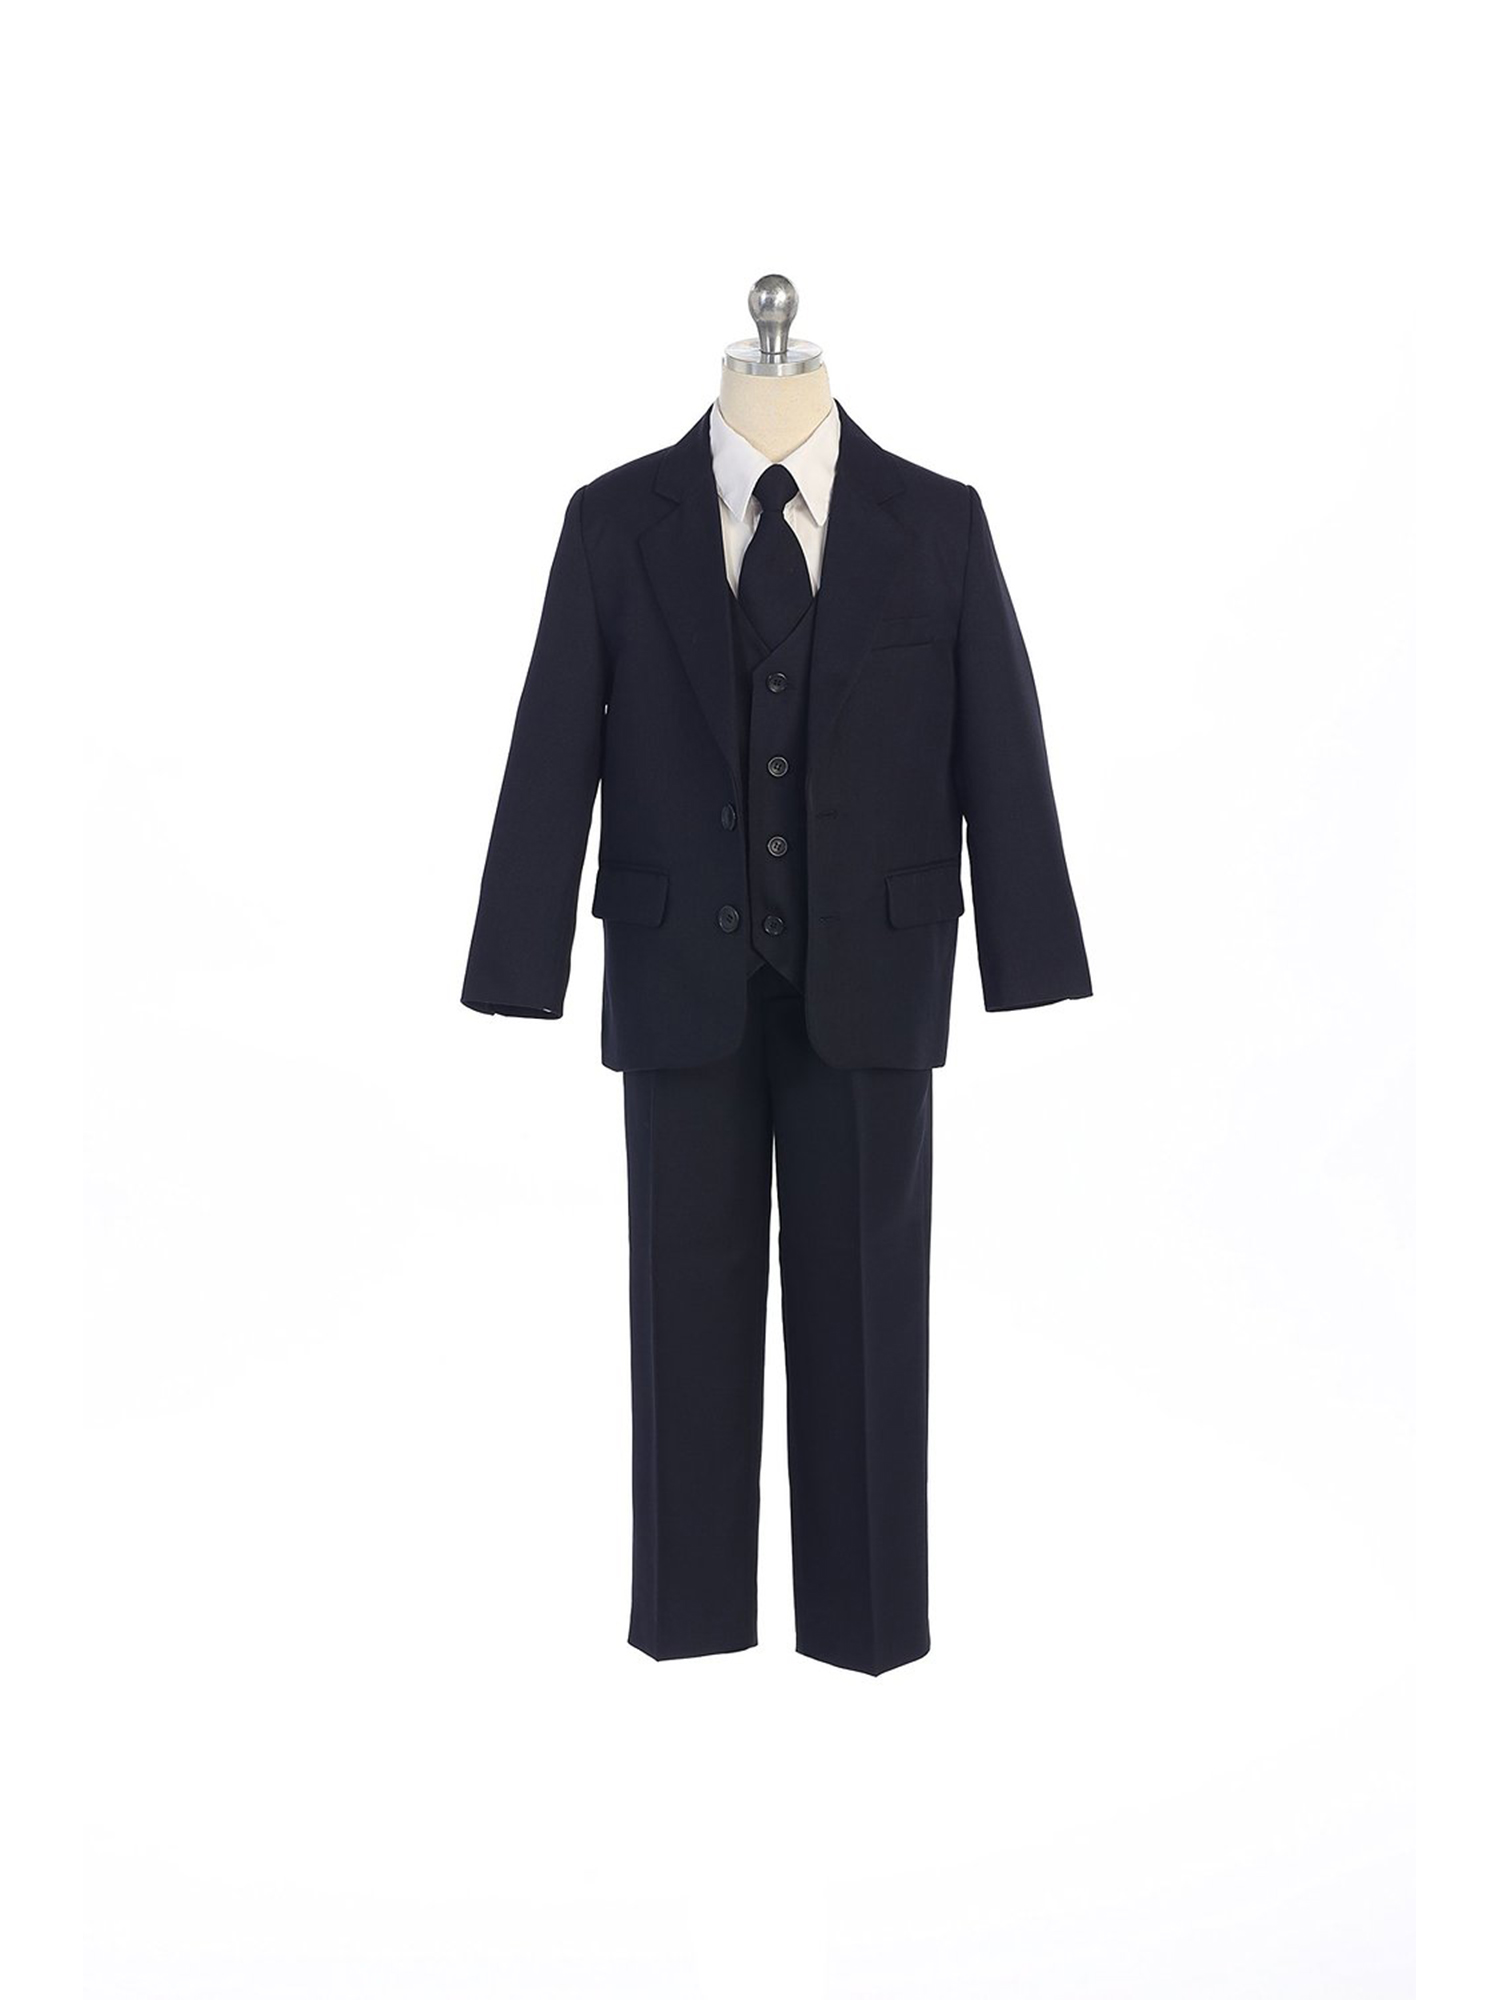 COLE Boys Suit with Shirt and Vest (5-Piece) - Navy Blue - Size 12